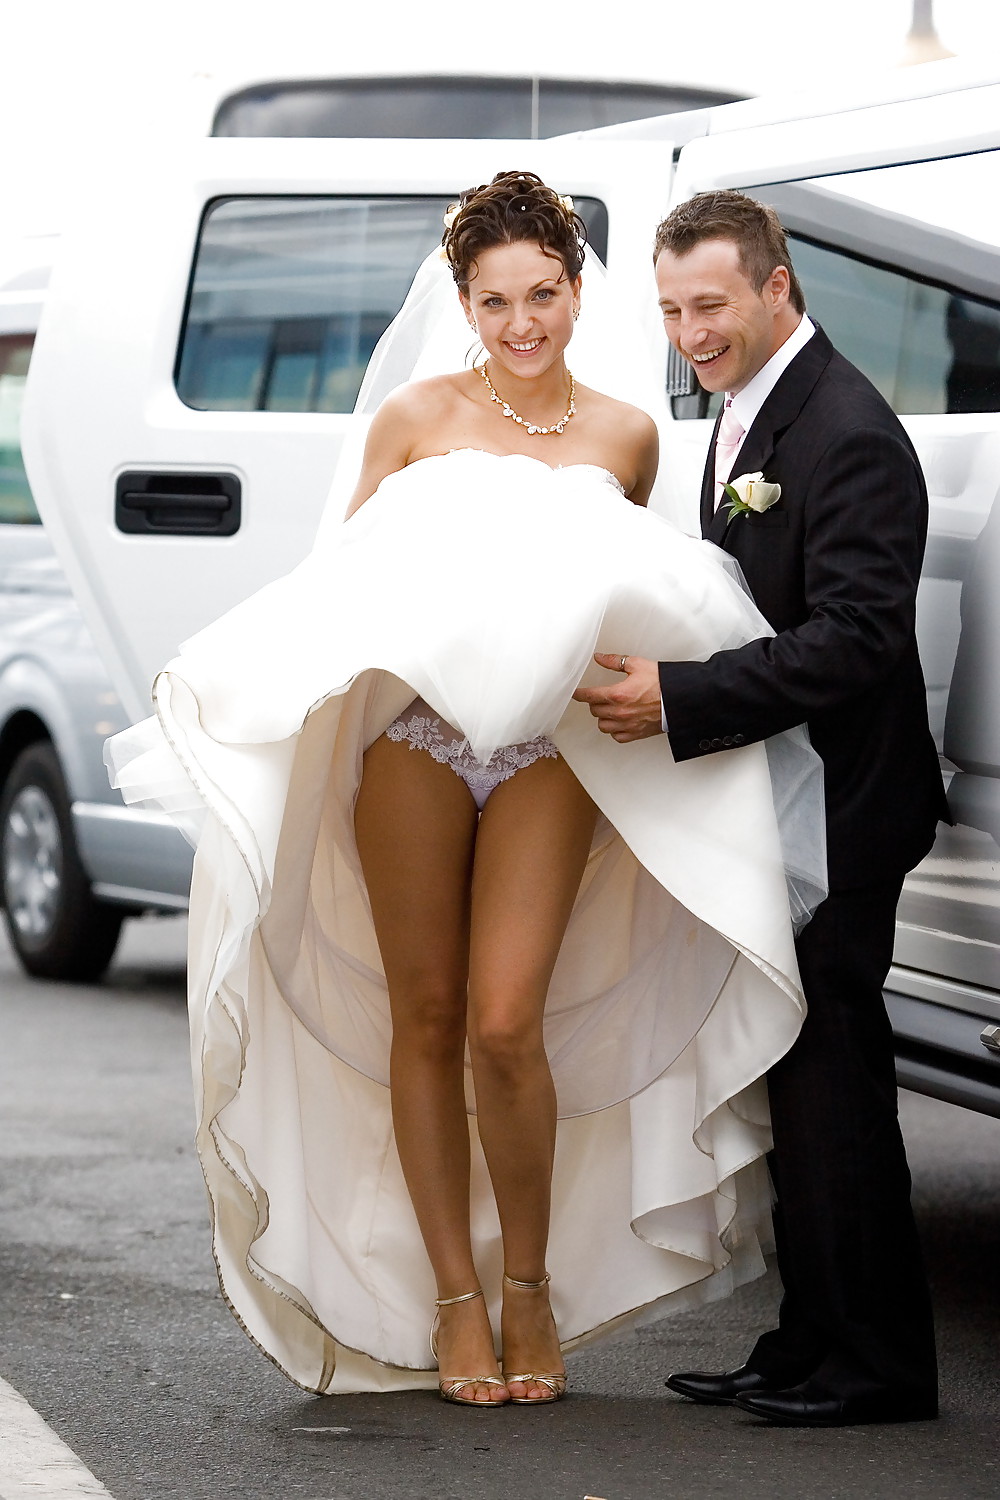 Sex BRIDES wedding voyeur upskirt white panties and bra image